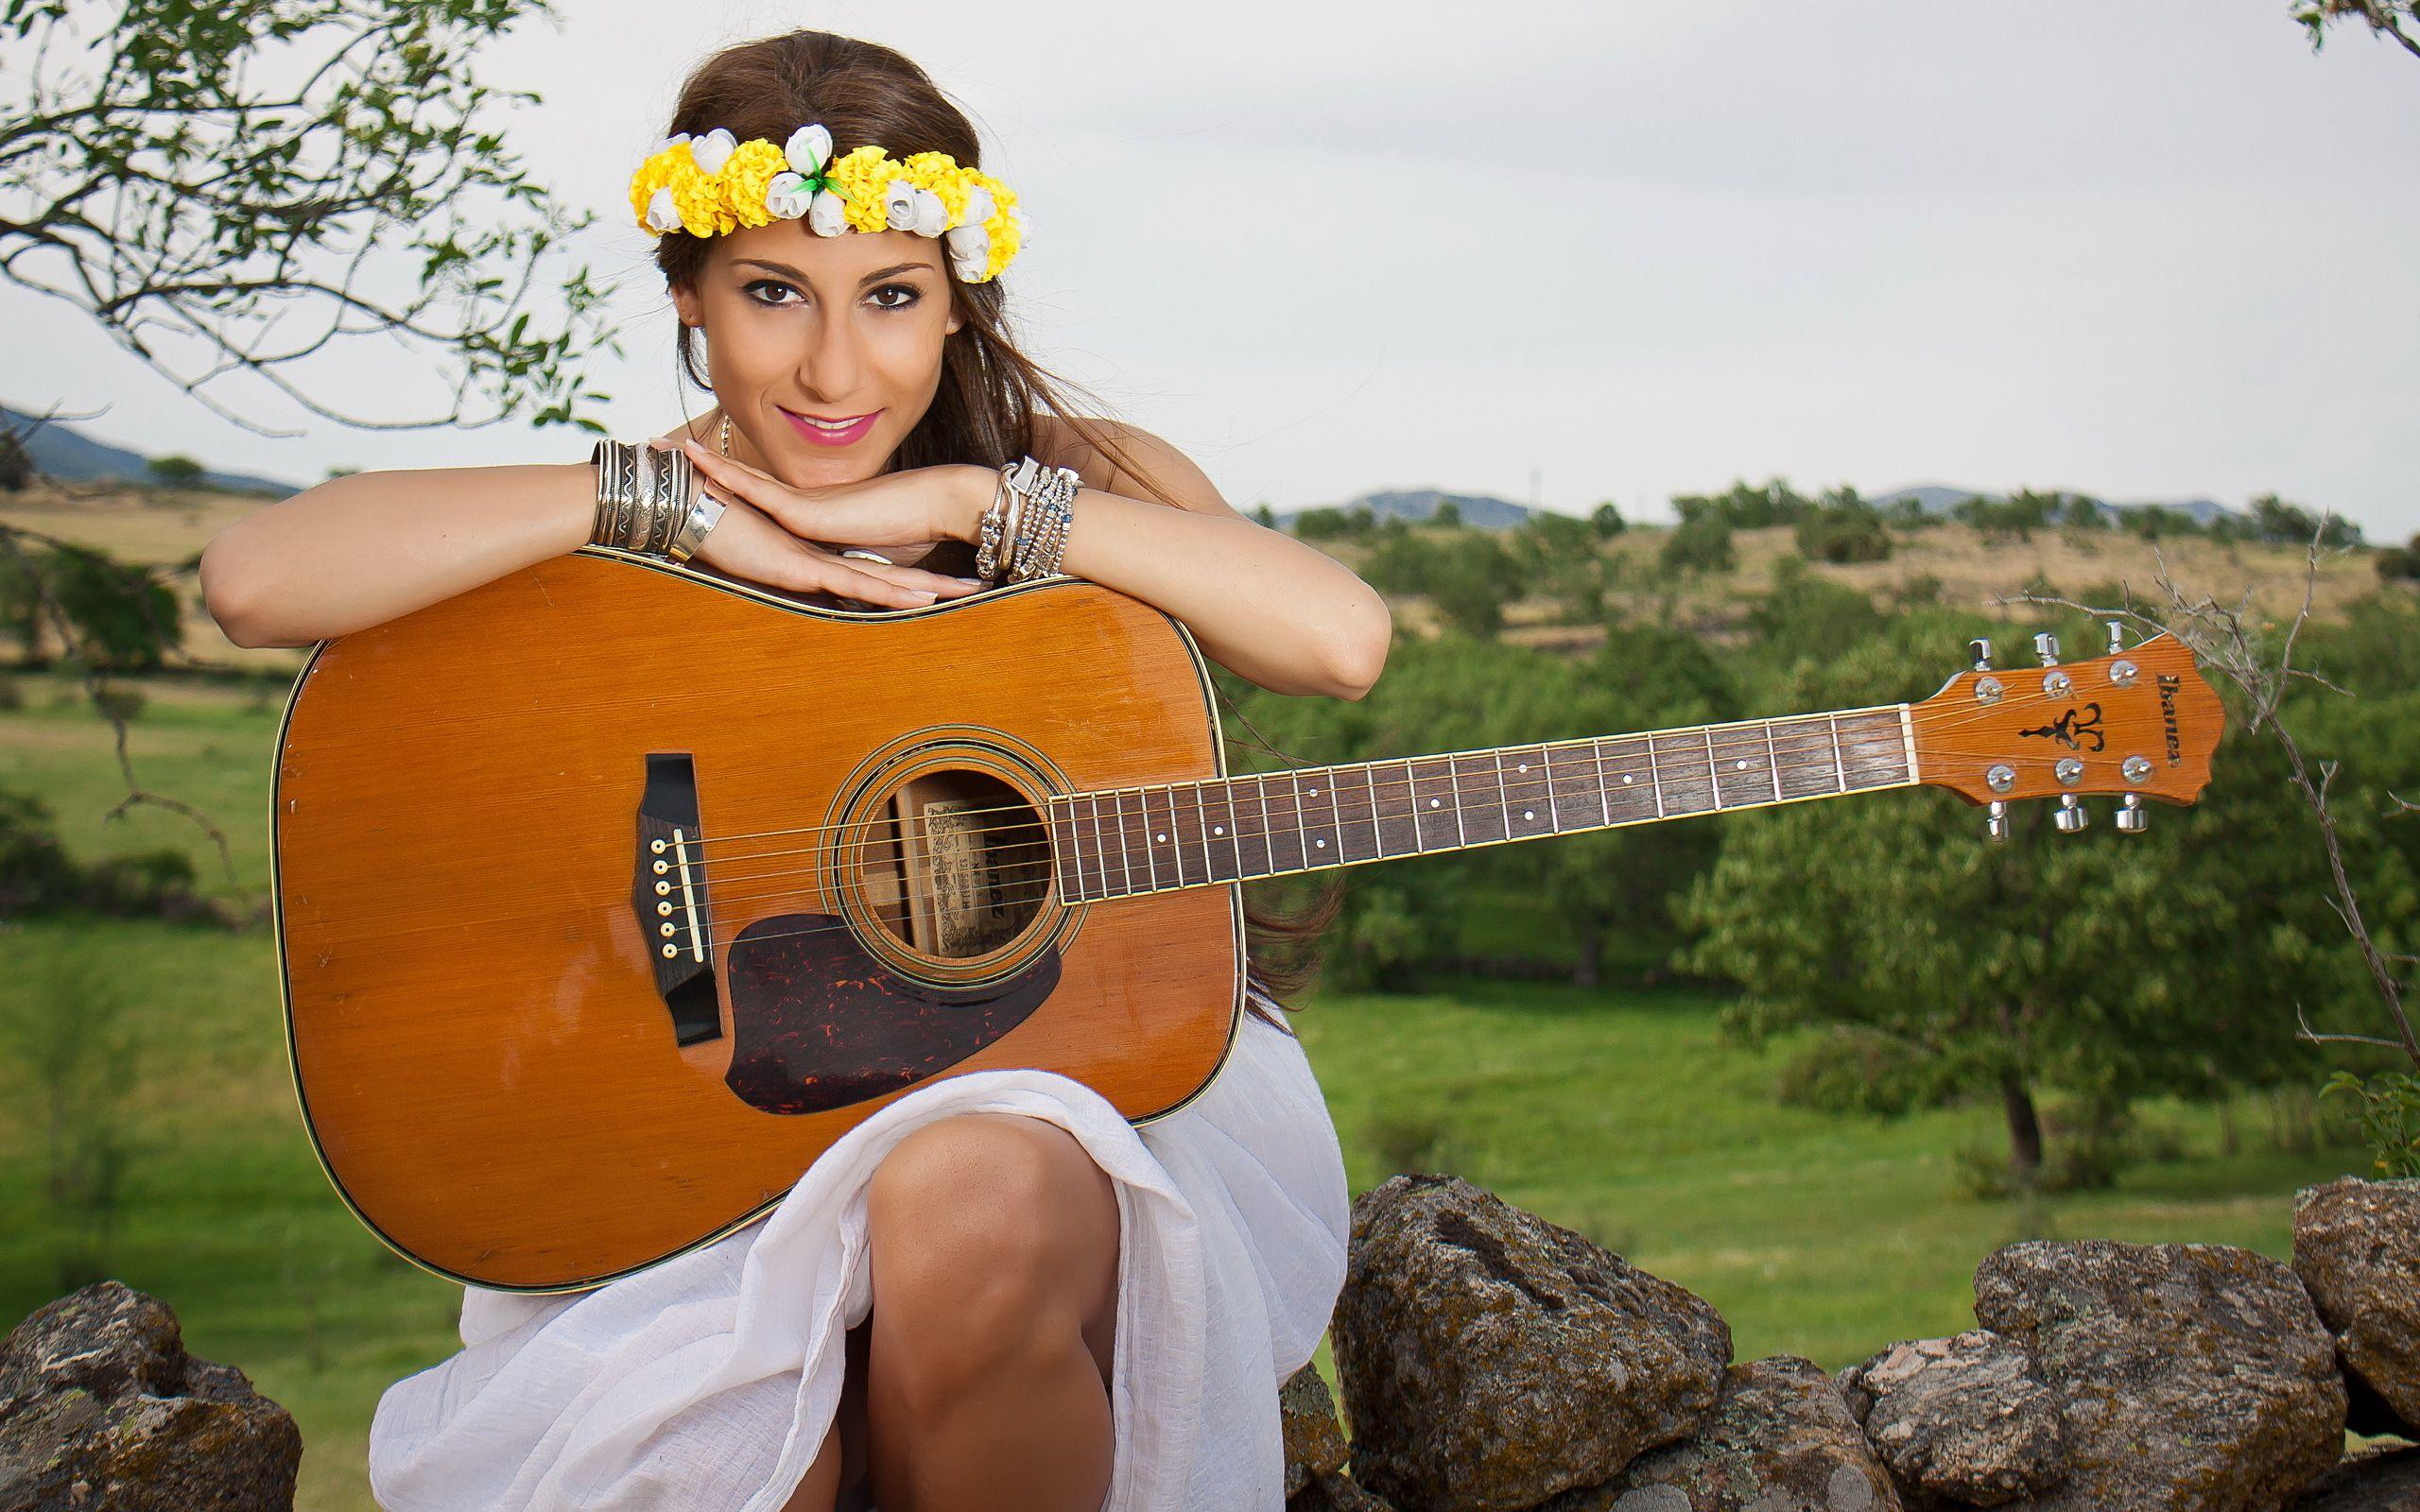 Wallpaper.wiki Girl Guitar Music Background Country Singer Photo